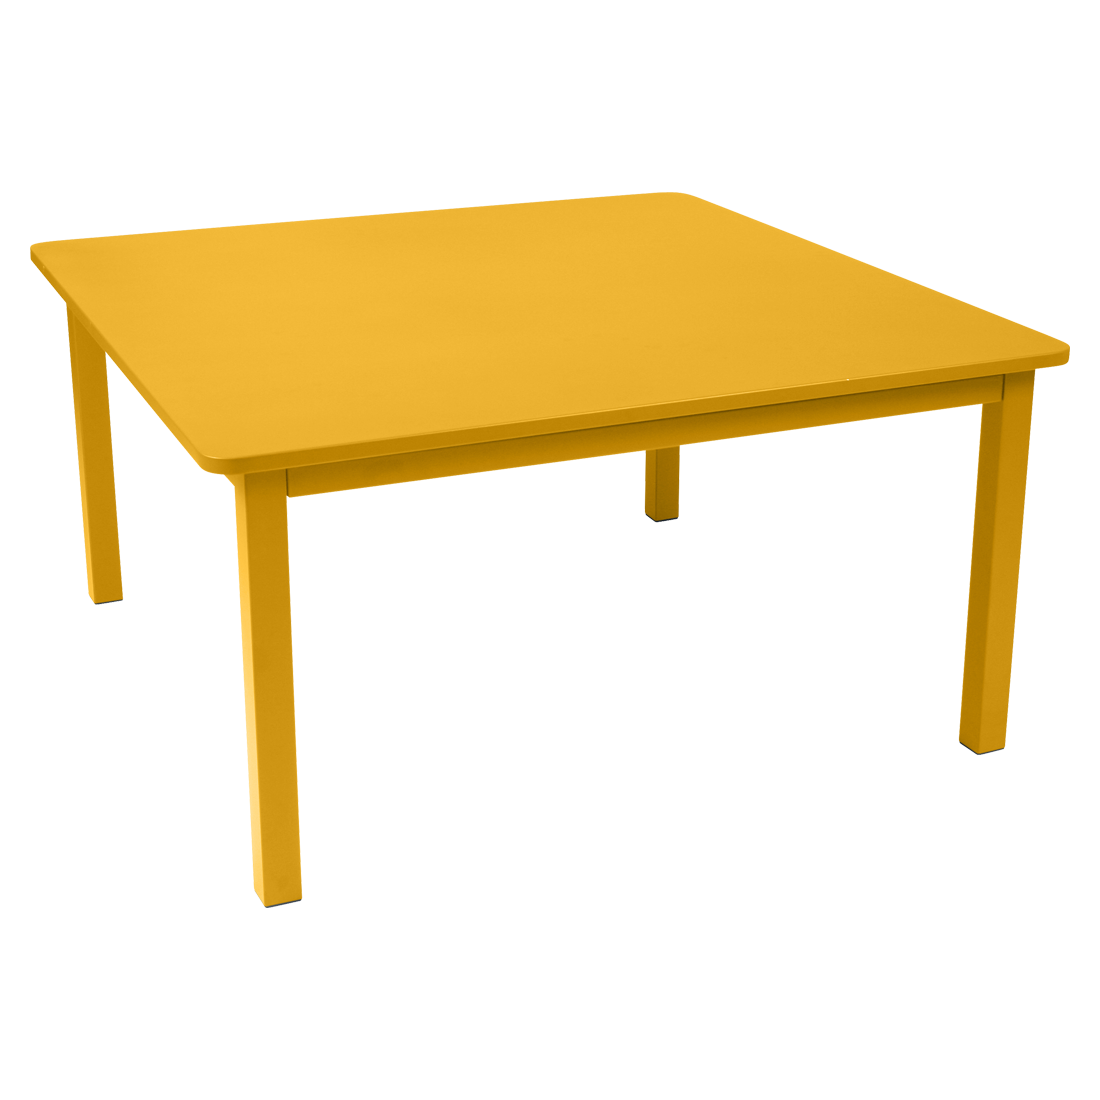 CRAFT TABLE 143 X 143 CM